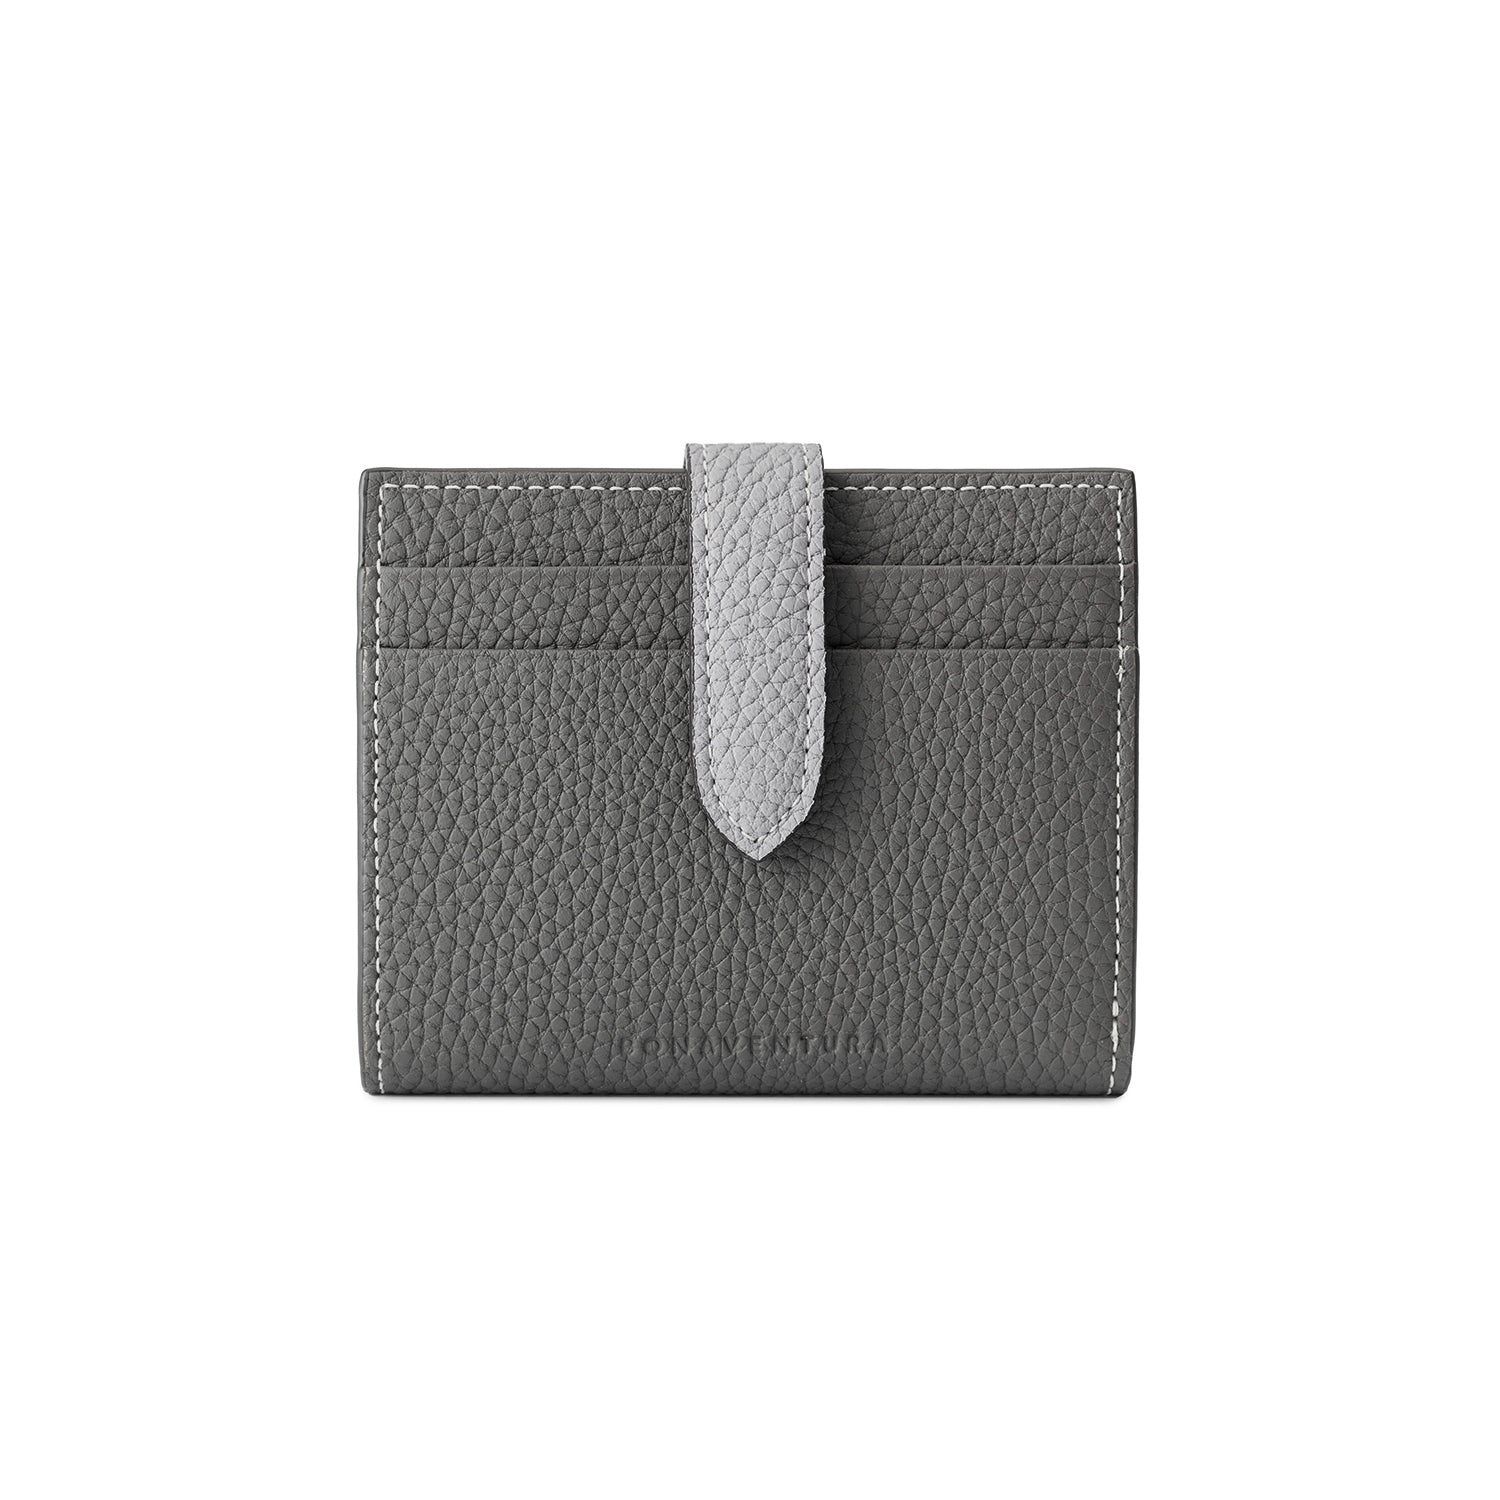 Belted medium wallet in shrunk leather